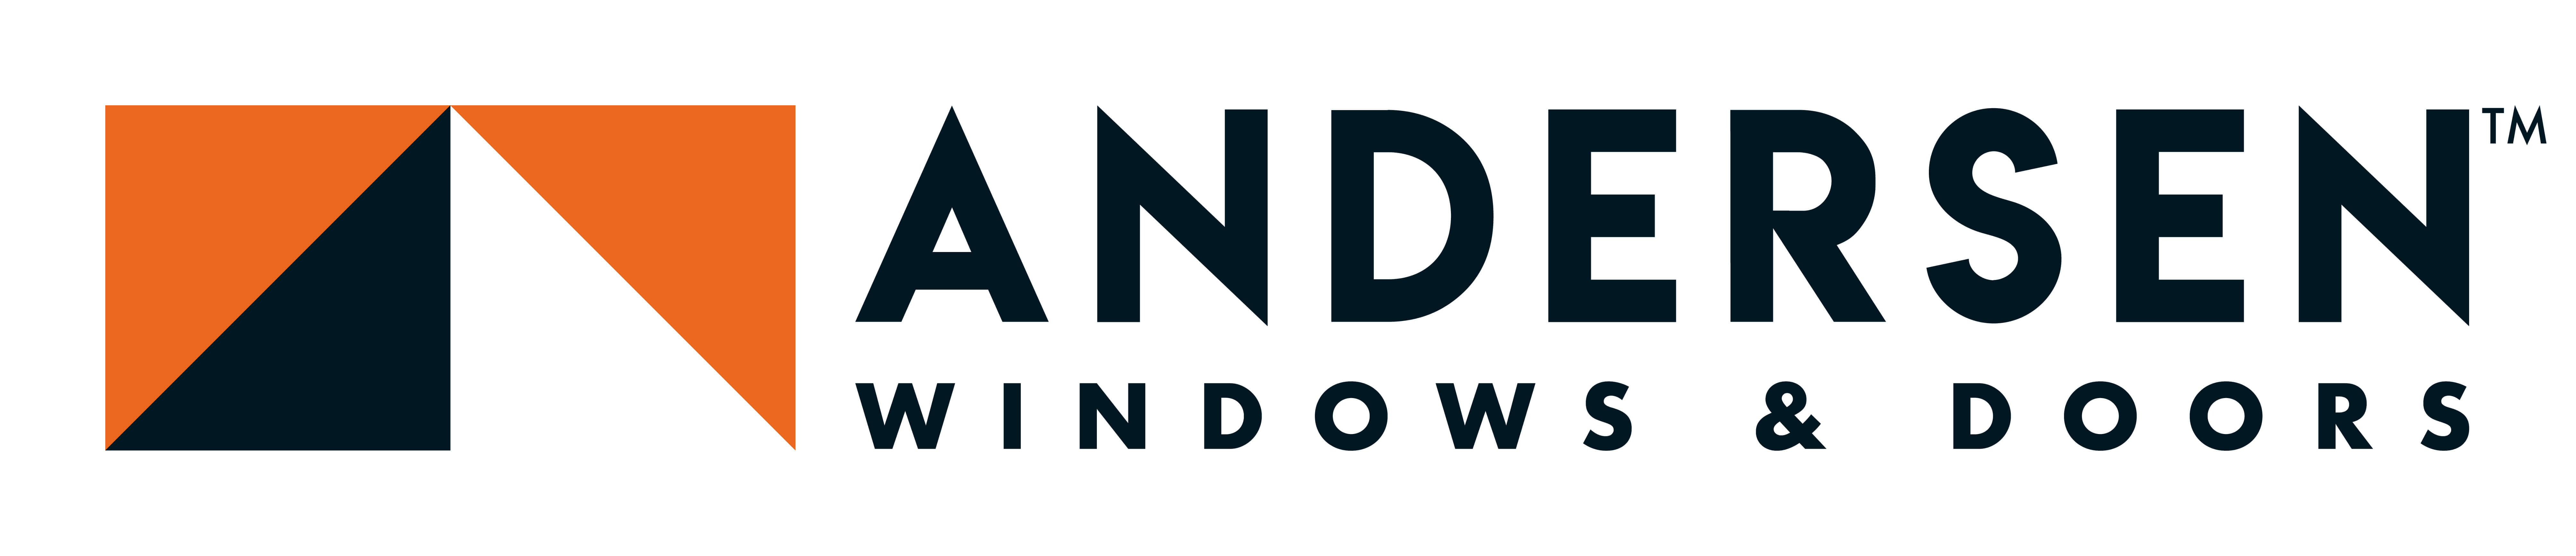 Andersen Windows and Doors - Timeless Beauty & Design